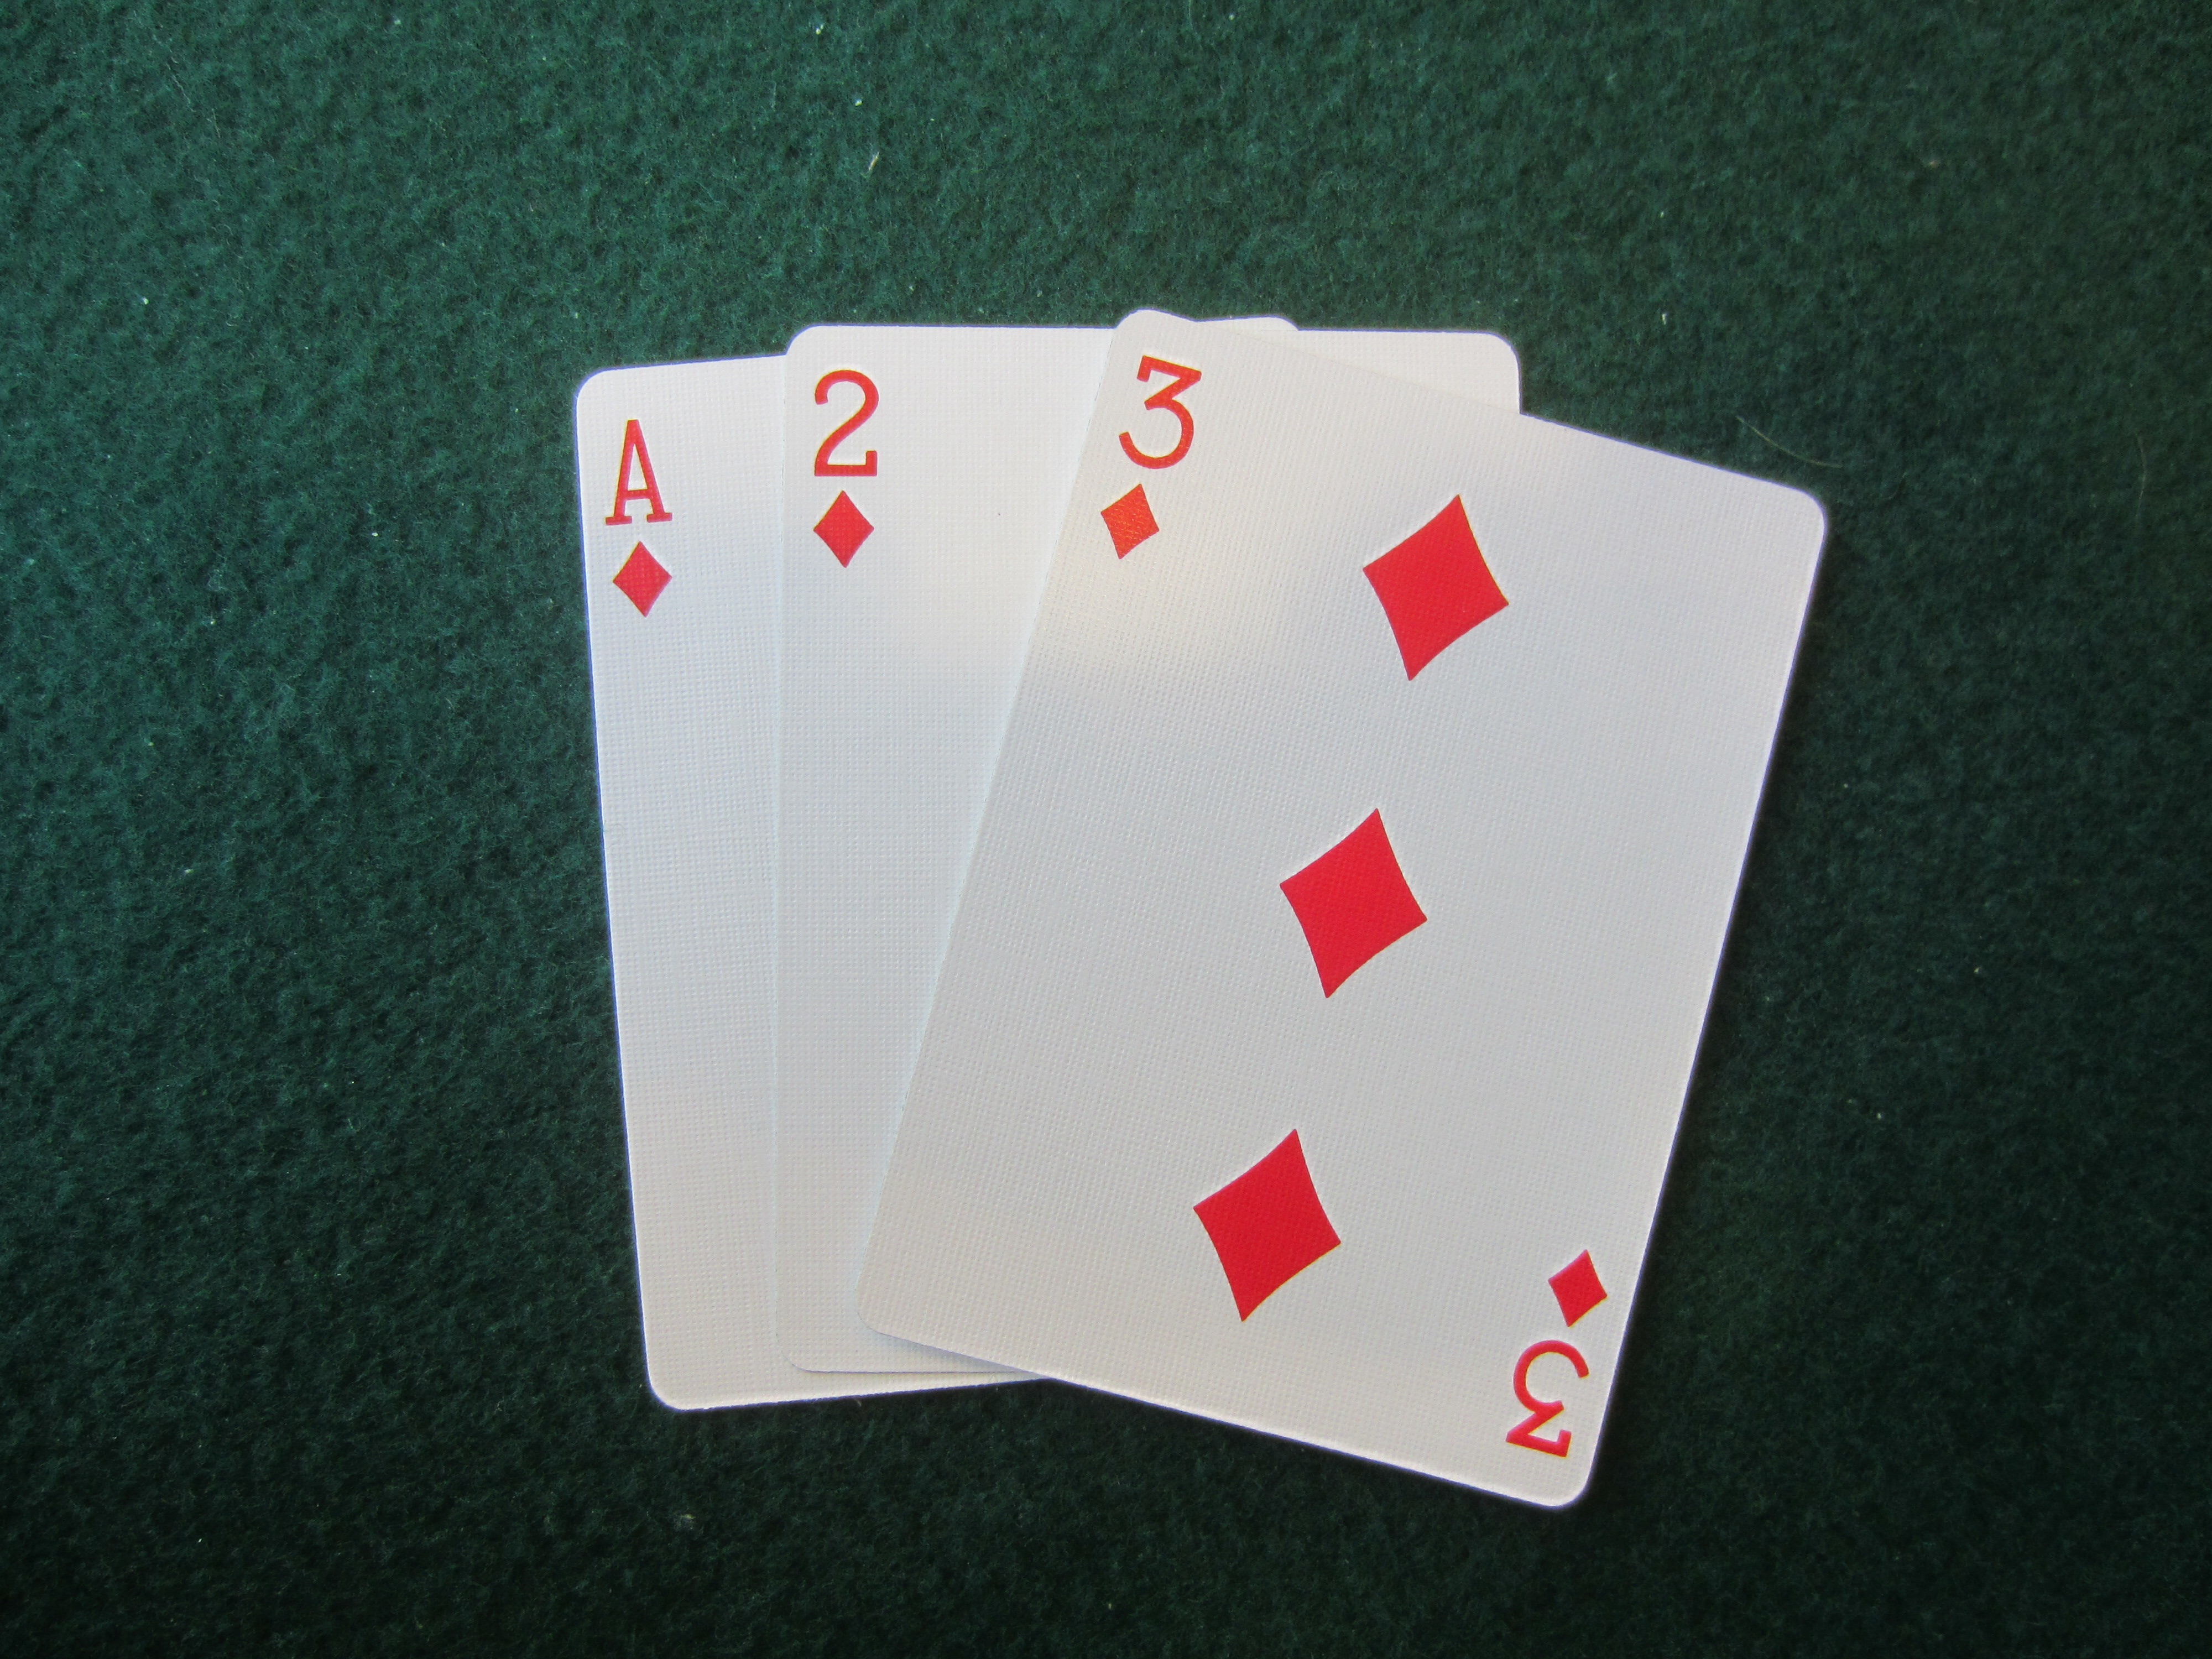 Brag (card game) - Wikipedia